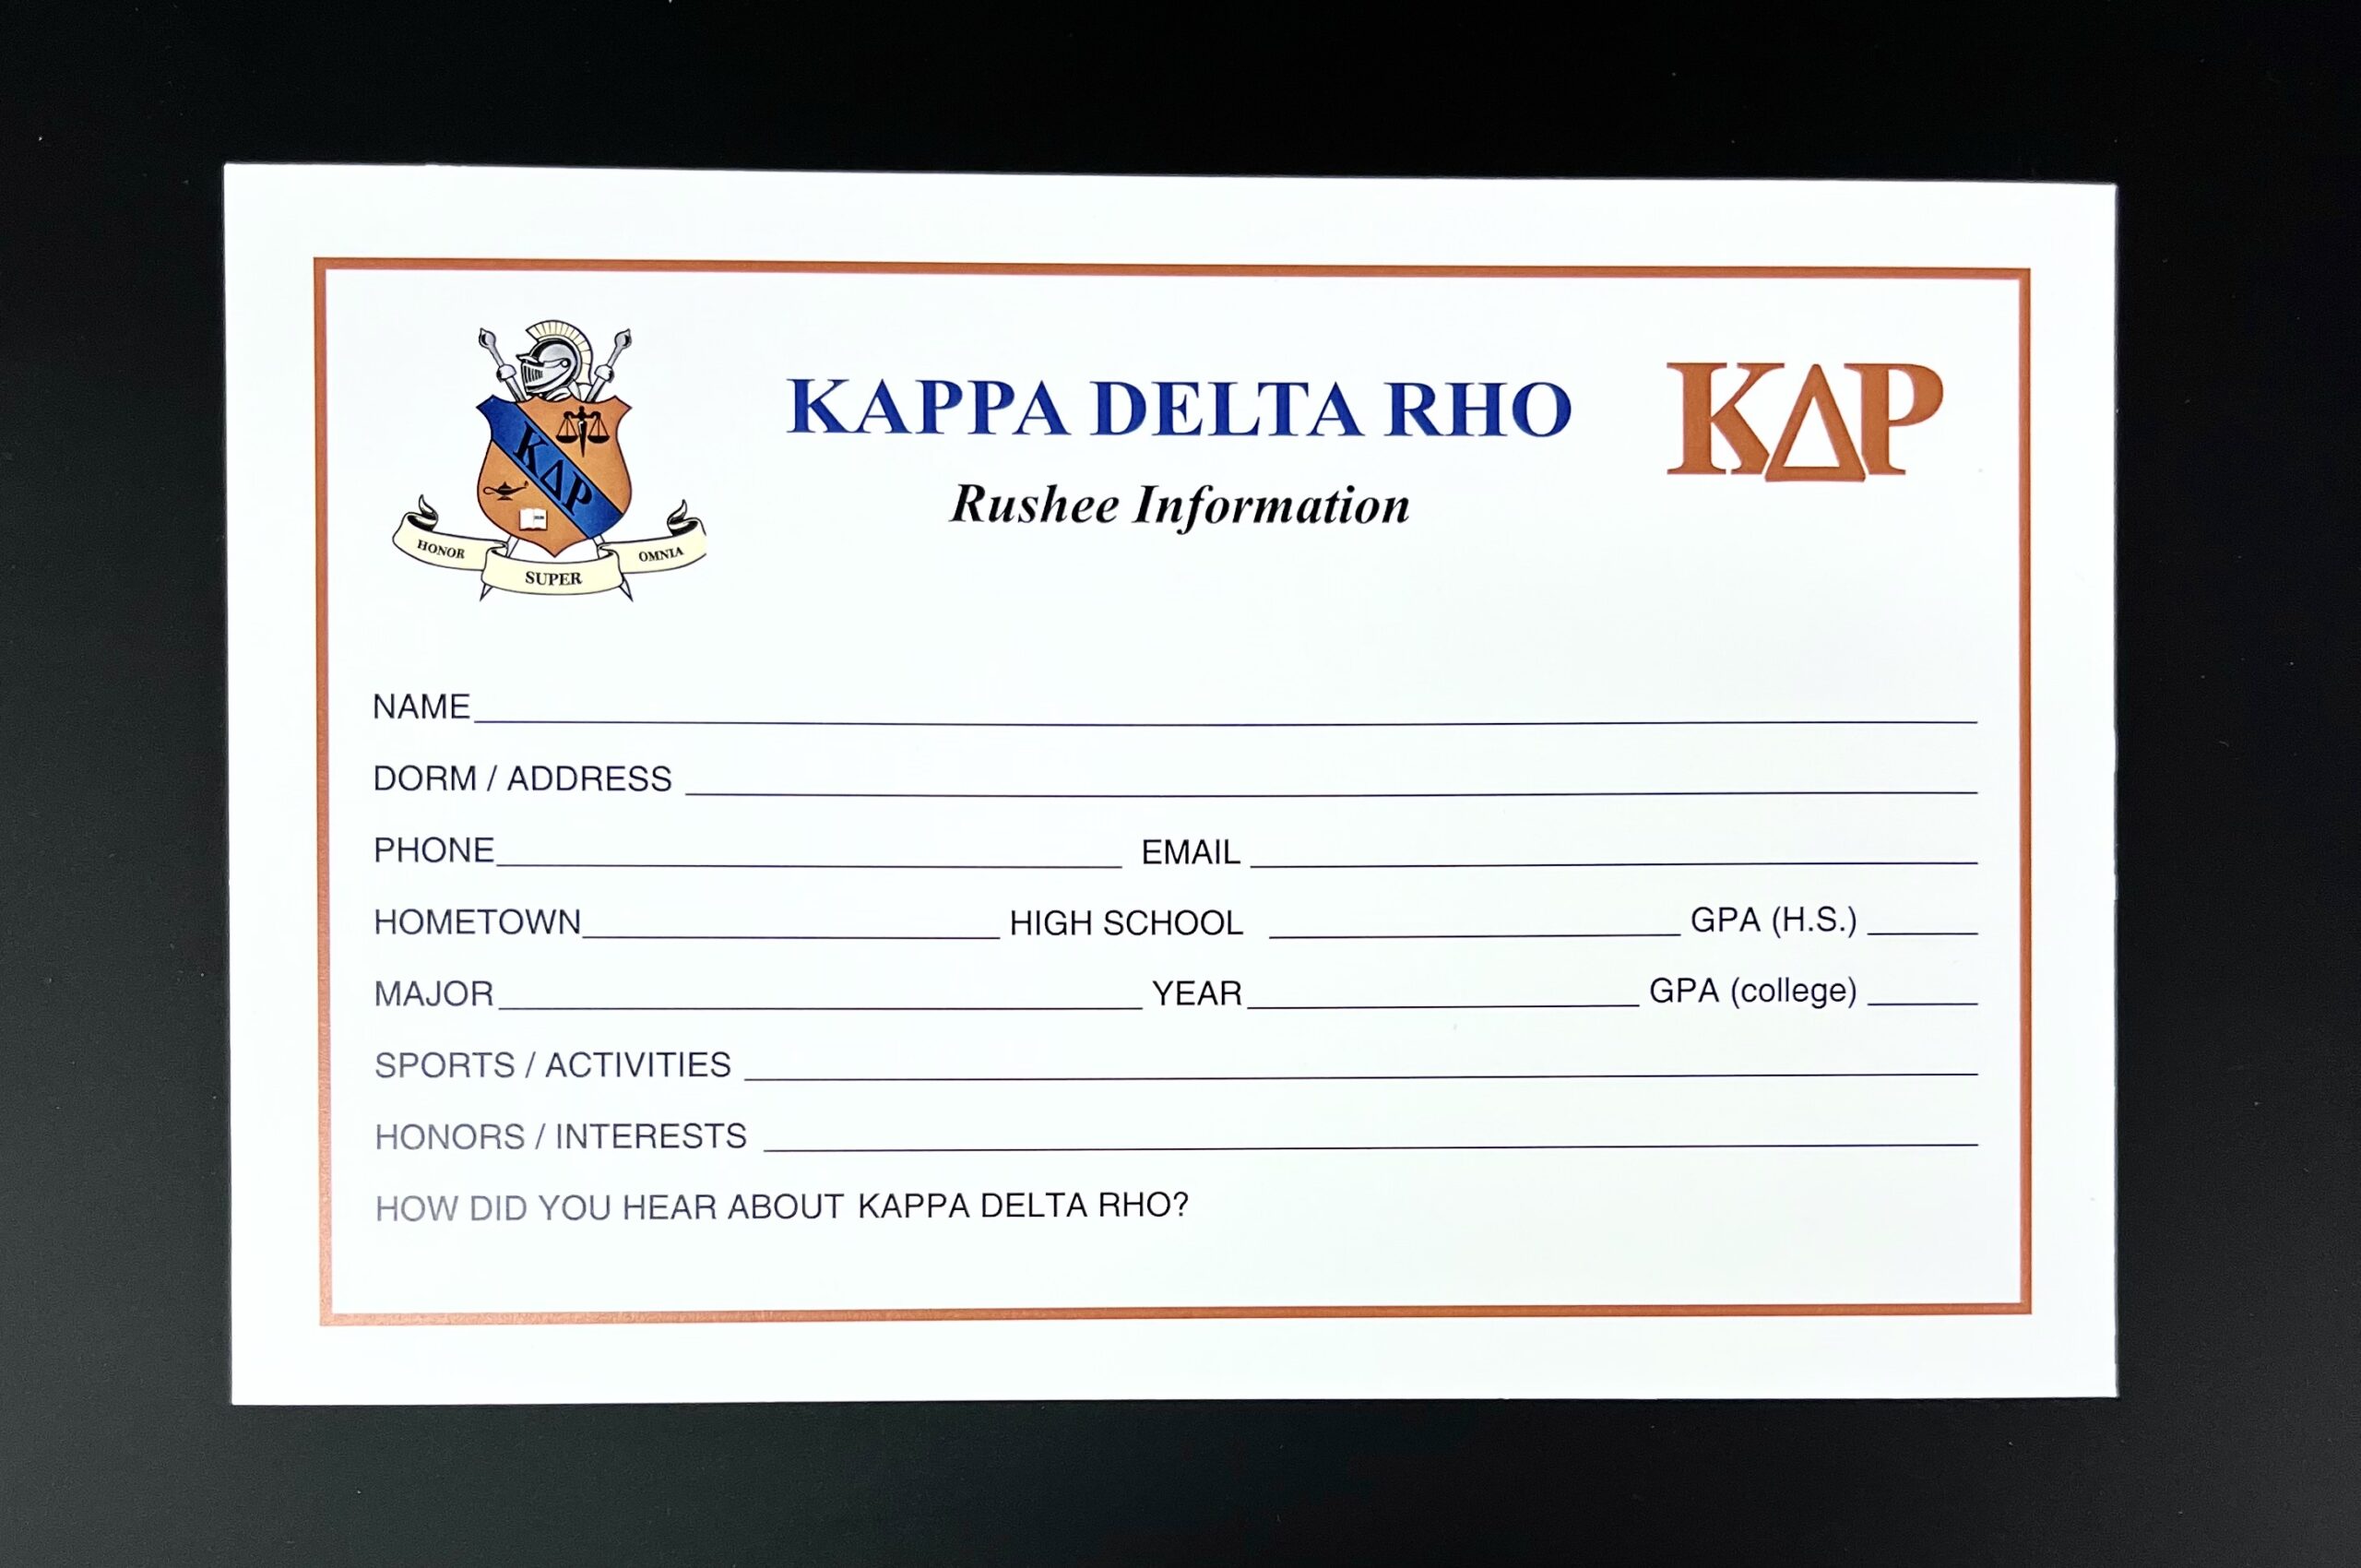 Rushee Information Cards Kappa Delta Rho